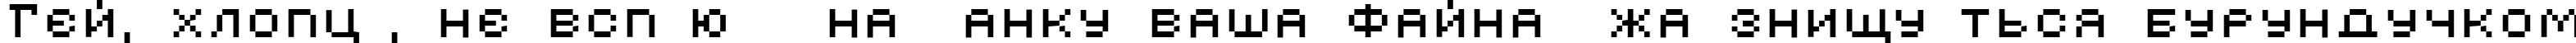 Пример написания шрифтом AuX DotBitC Xtra SmallCaps текста на украинском